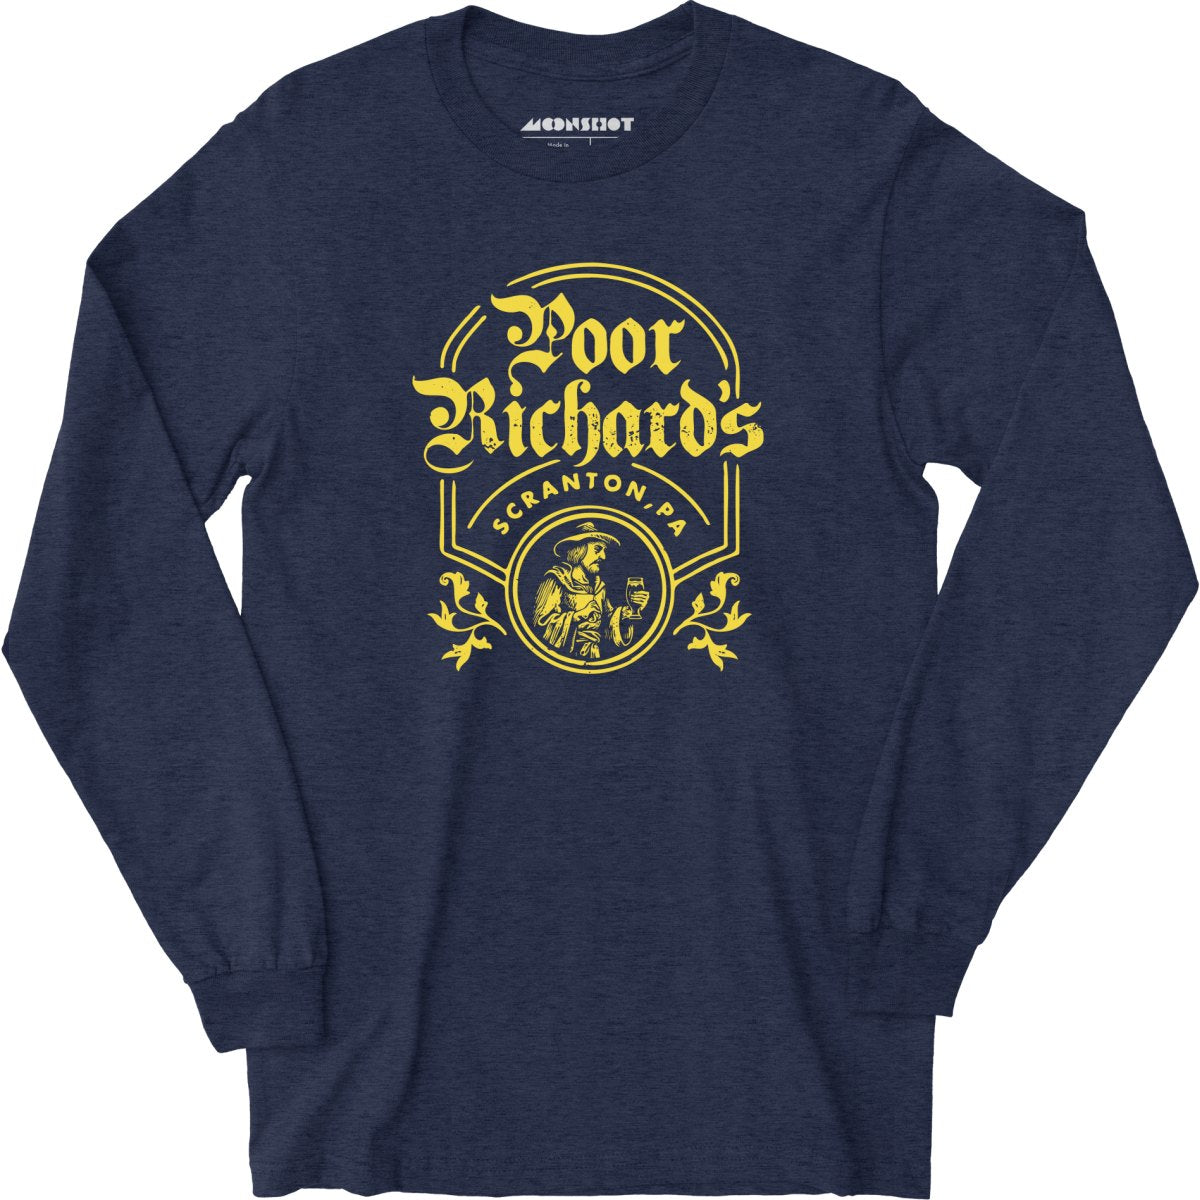 Poor Richard's - Long Sleeve T-Shirt